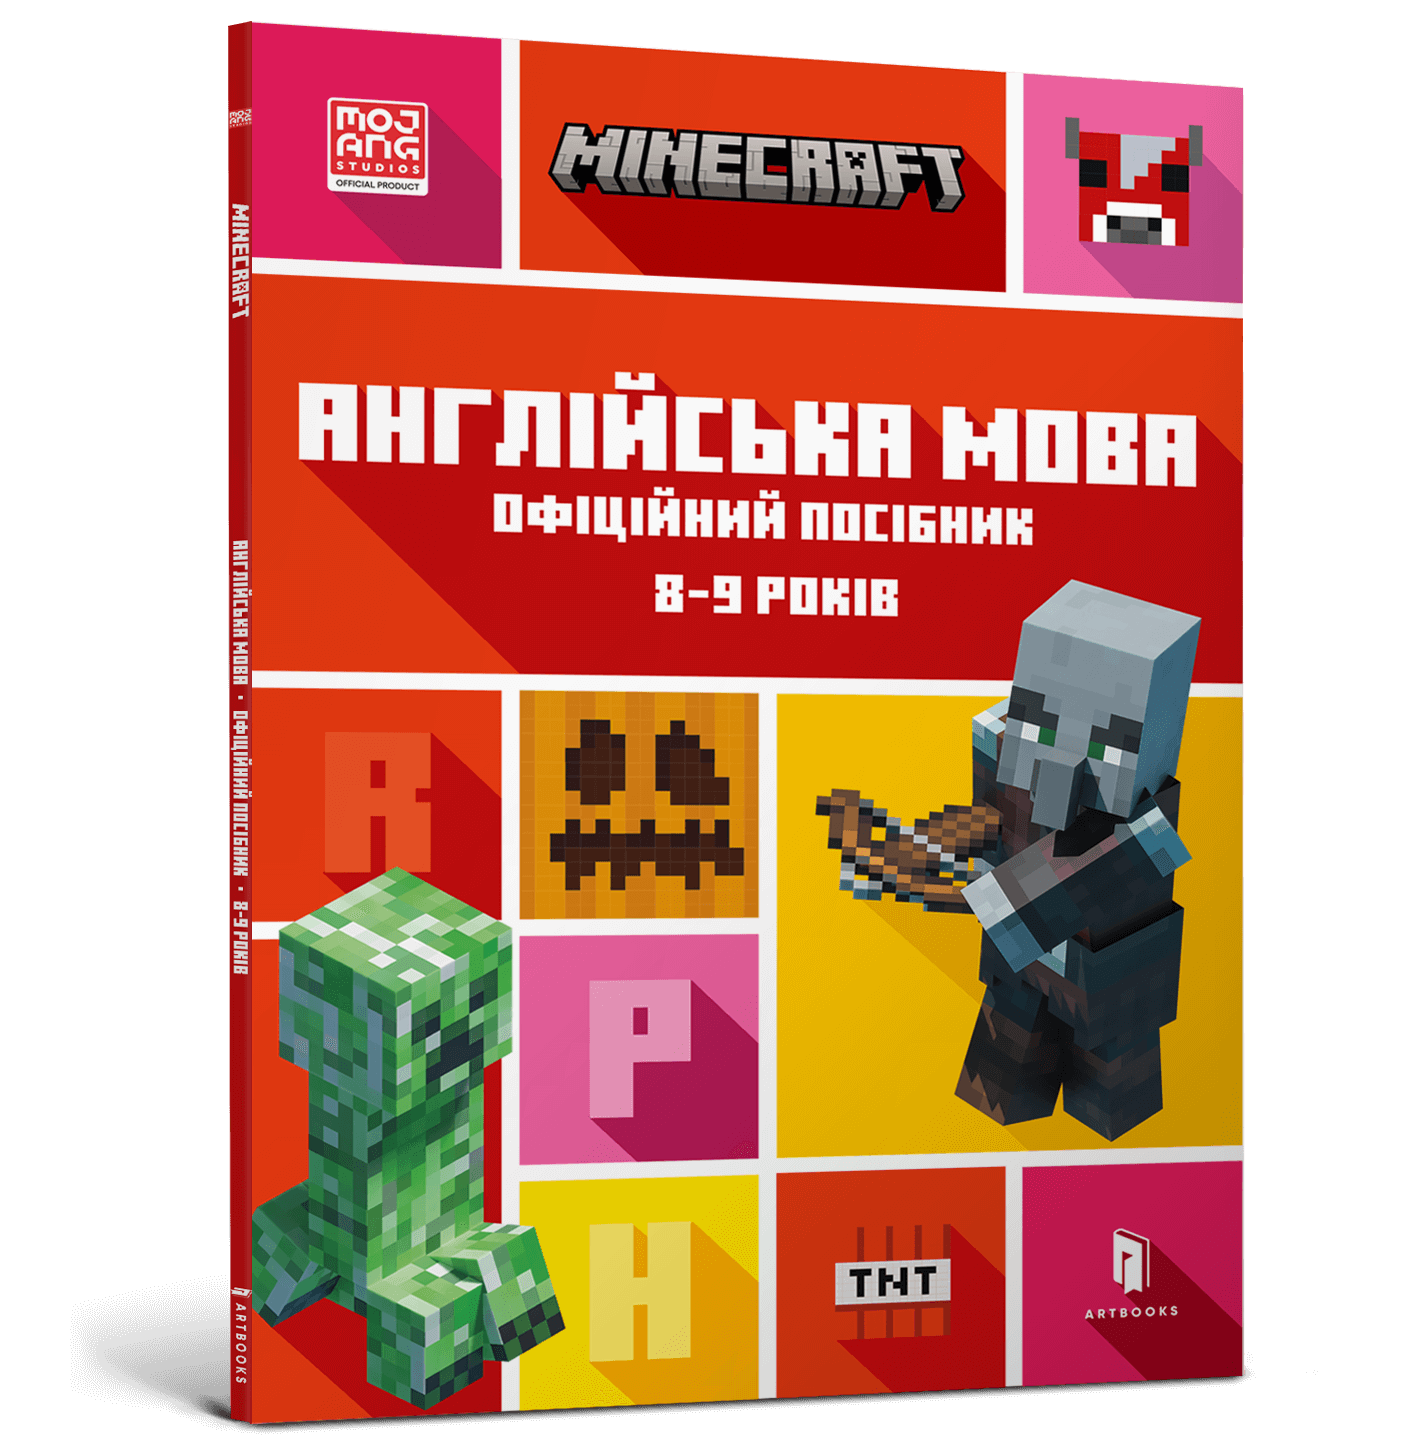 Англ майн. Учебник английского в майнкрафт. Minecraft Education Edition обложка.